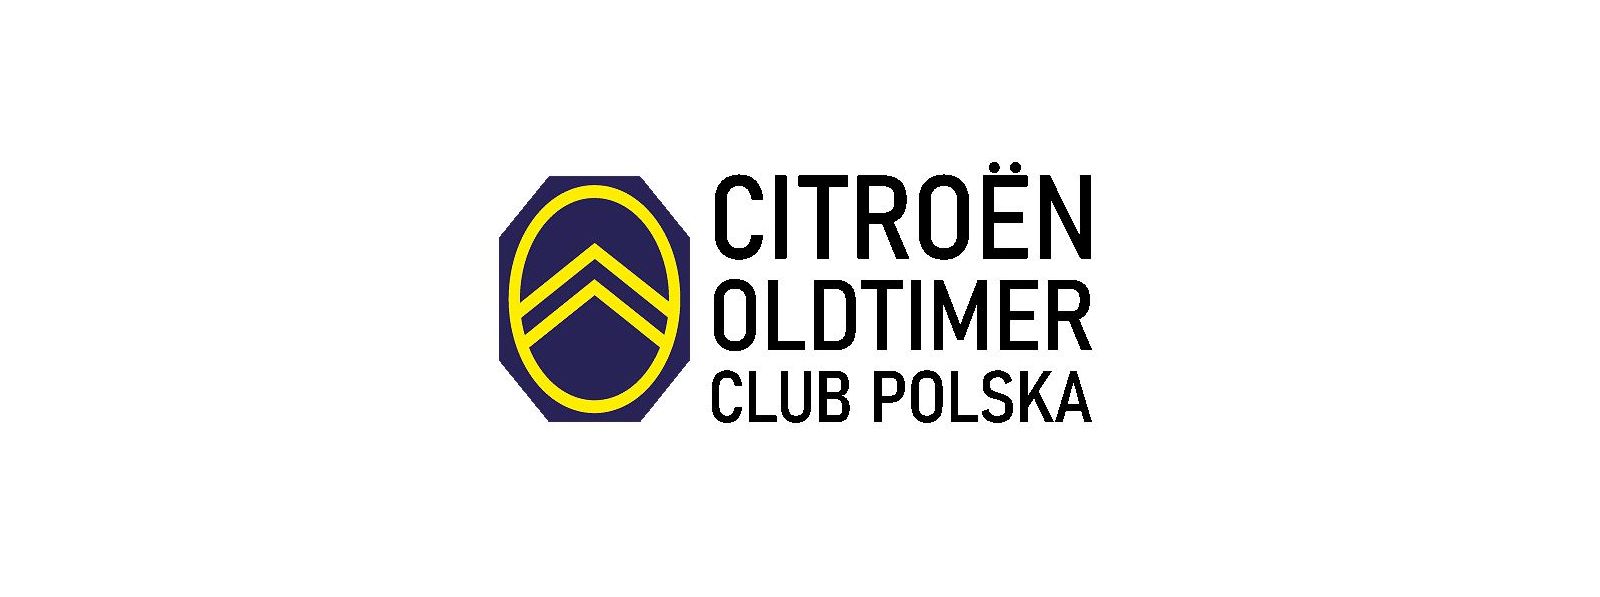 Współpracę z Citroen Oldtimer CLUB Polska